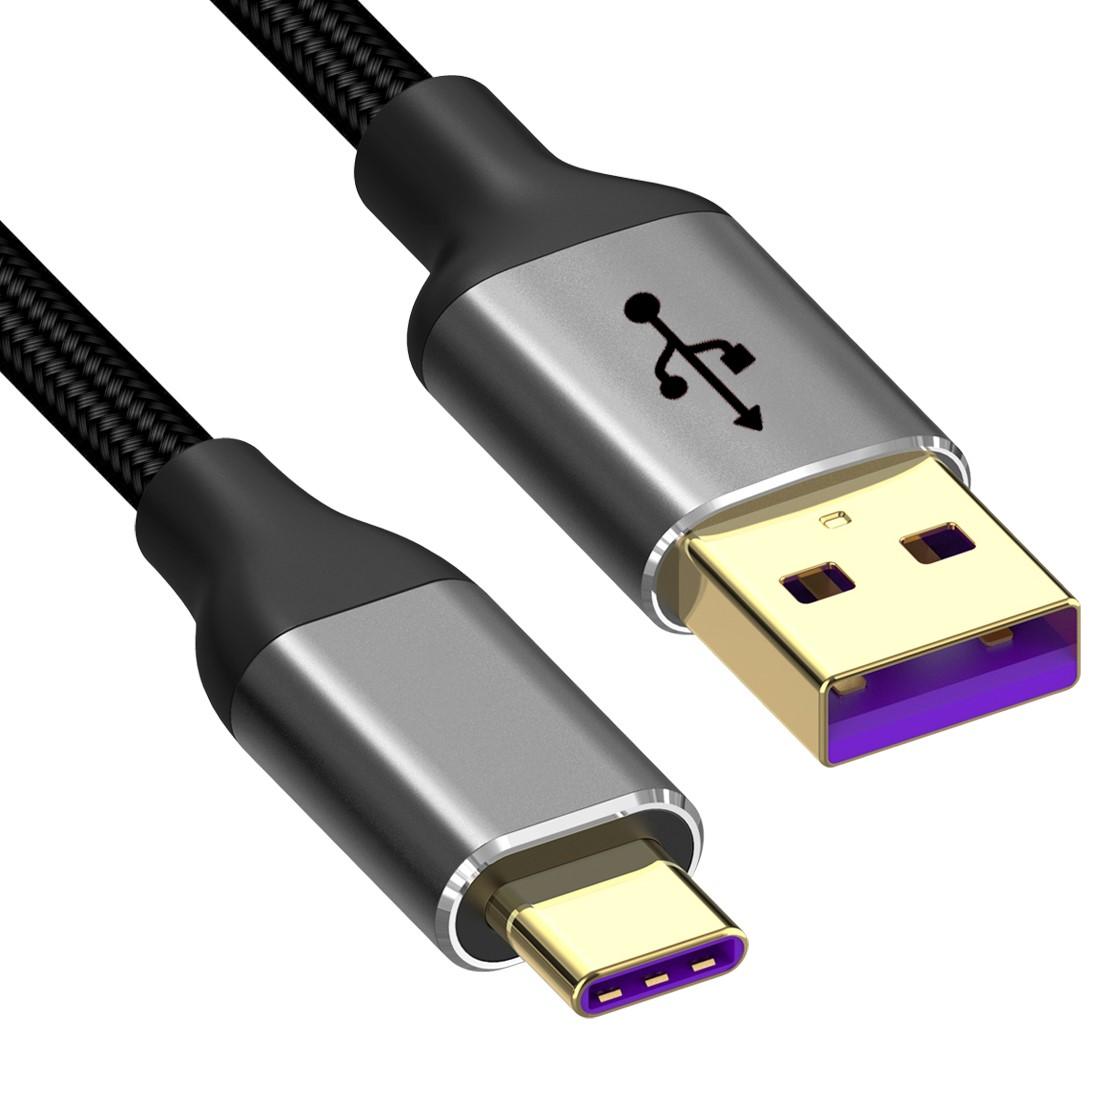 IPad USB lader - 0.5 meter - Allteq